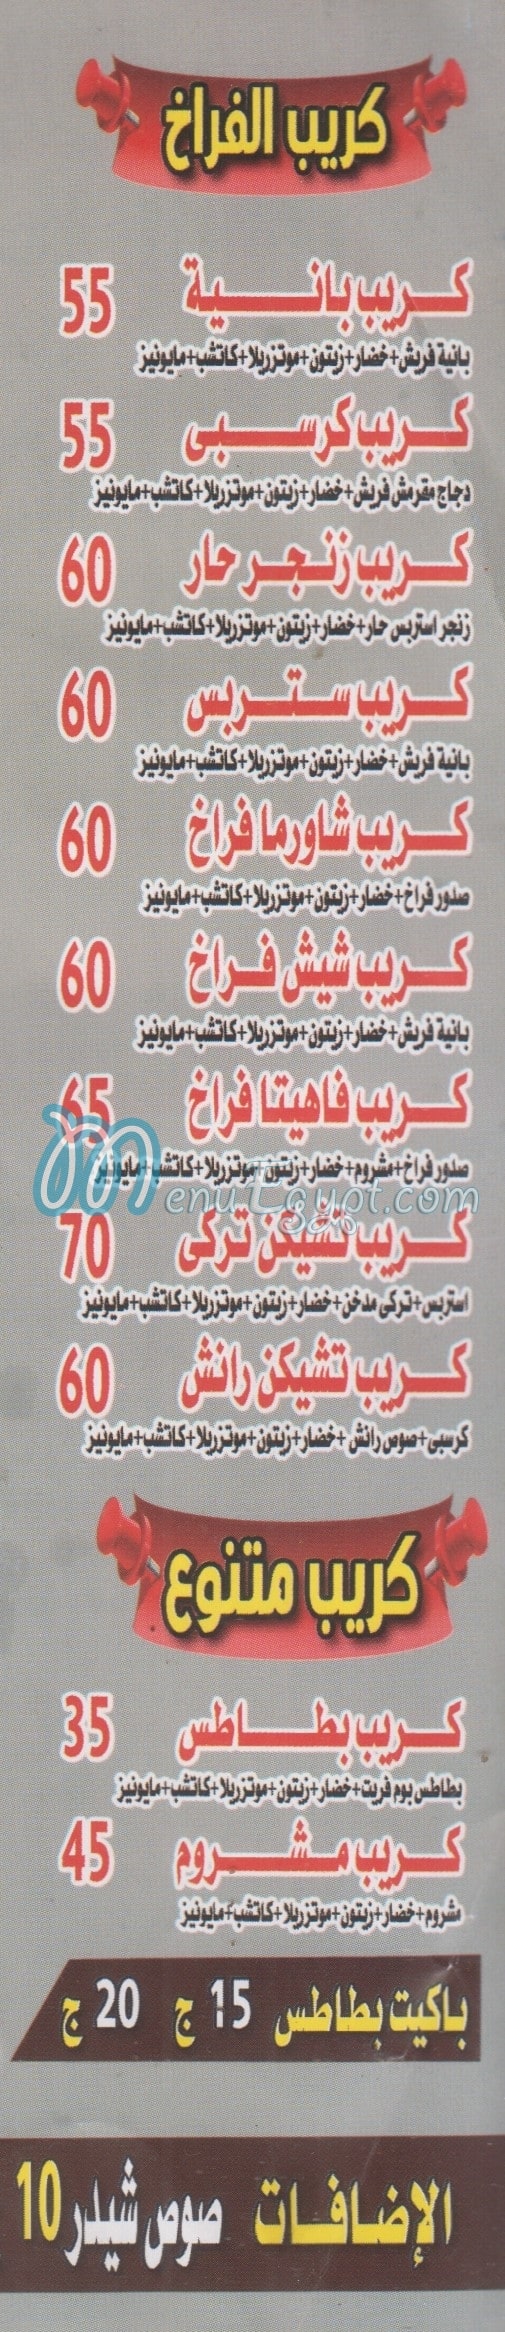 Awlad EL SHEKH menu